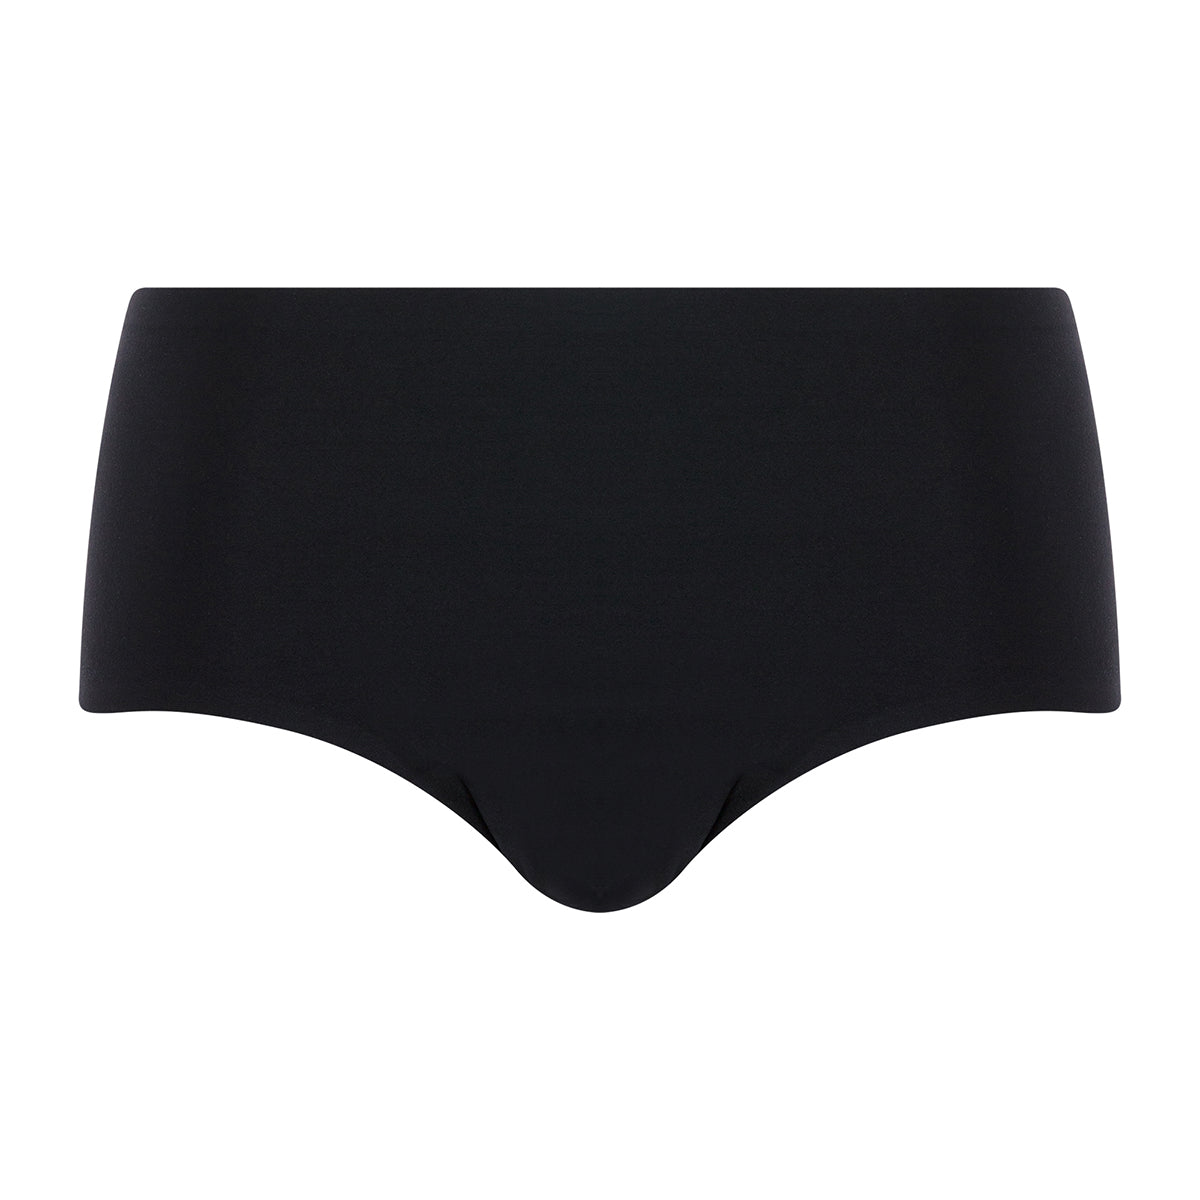 Akiihool Women Briefs Women's Ultra Soft High Waist Modal Underwear Panties  (Black,L) 